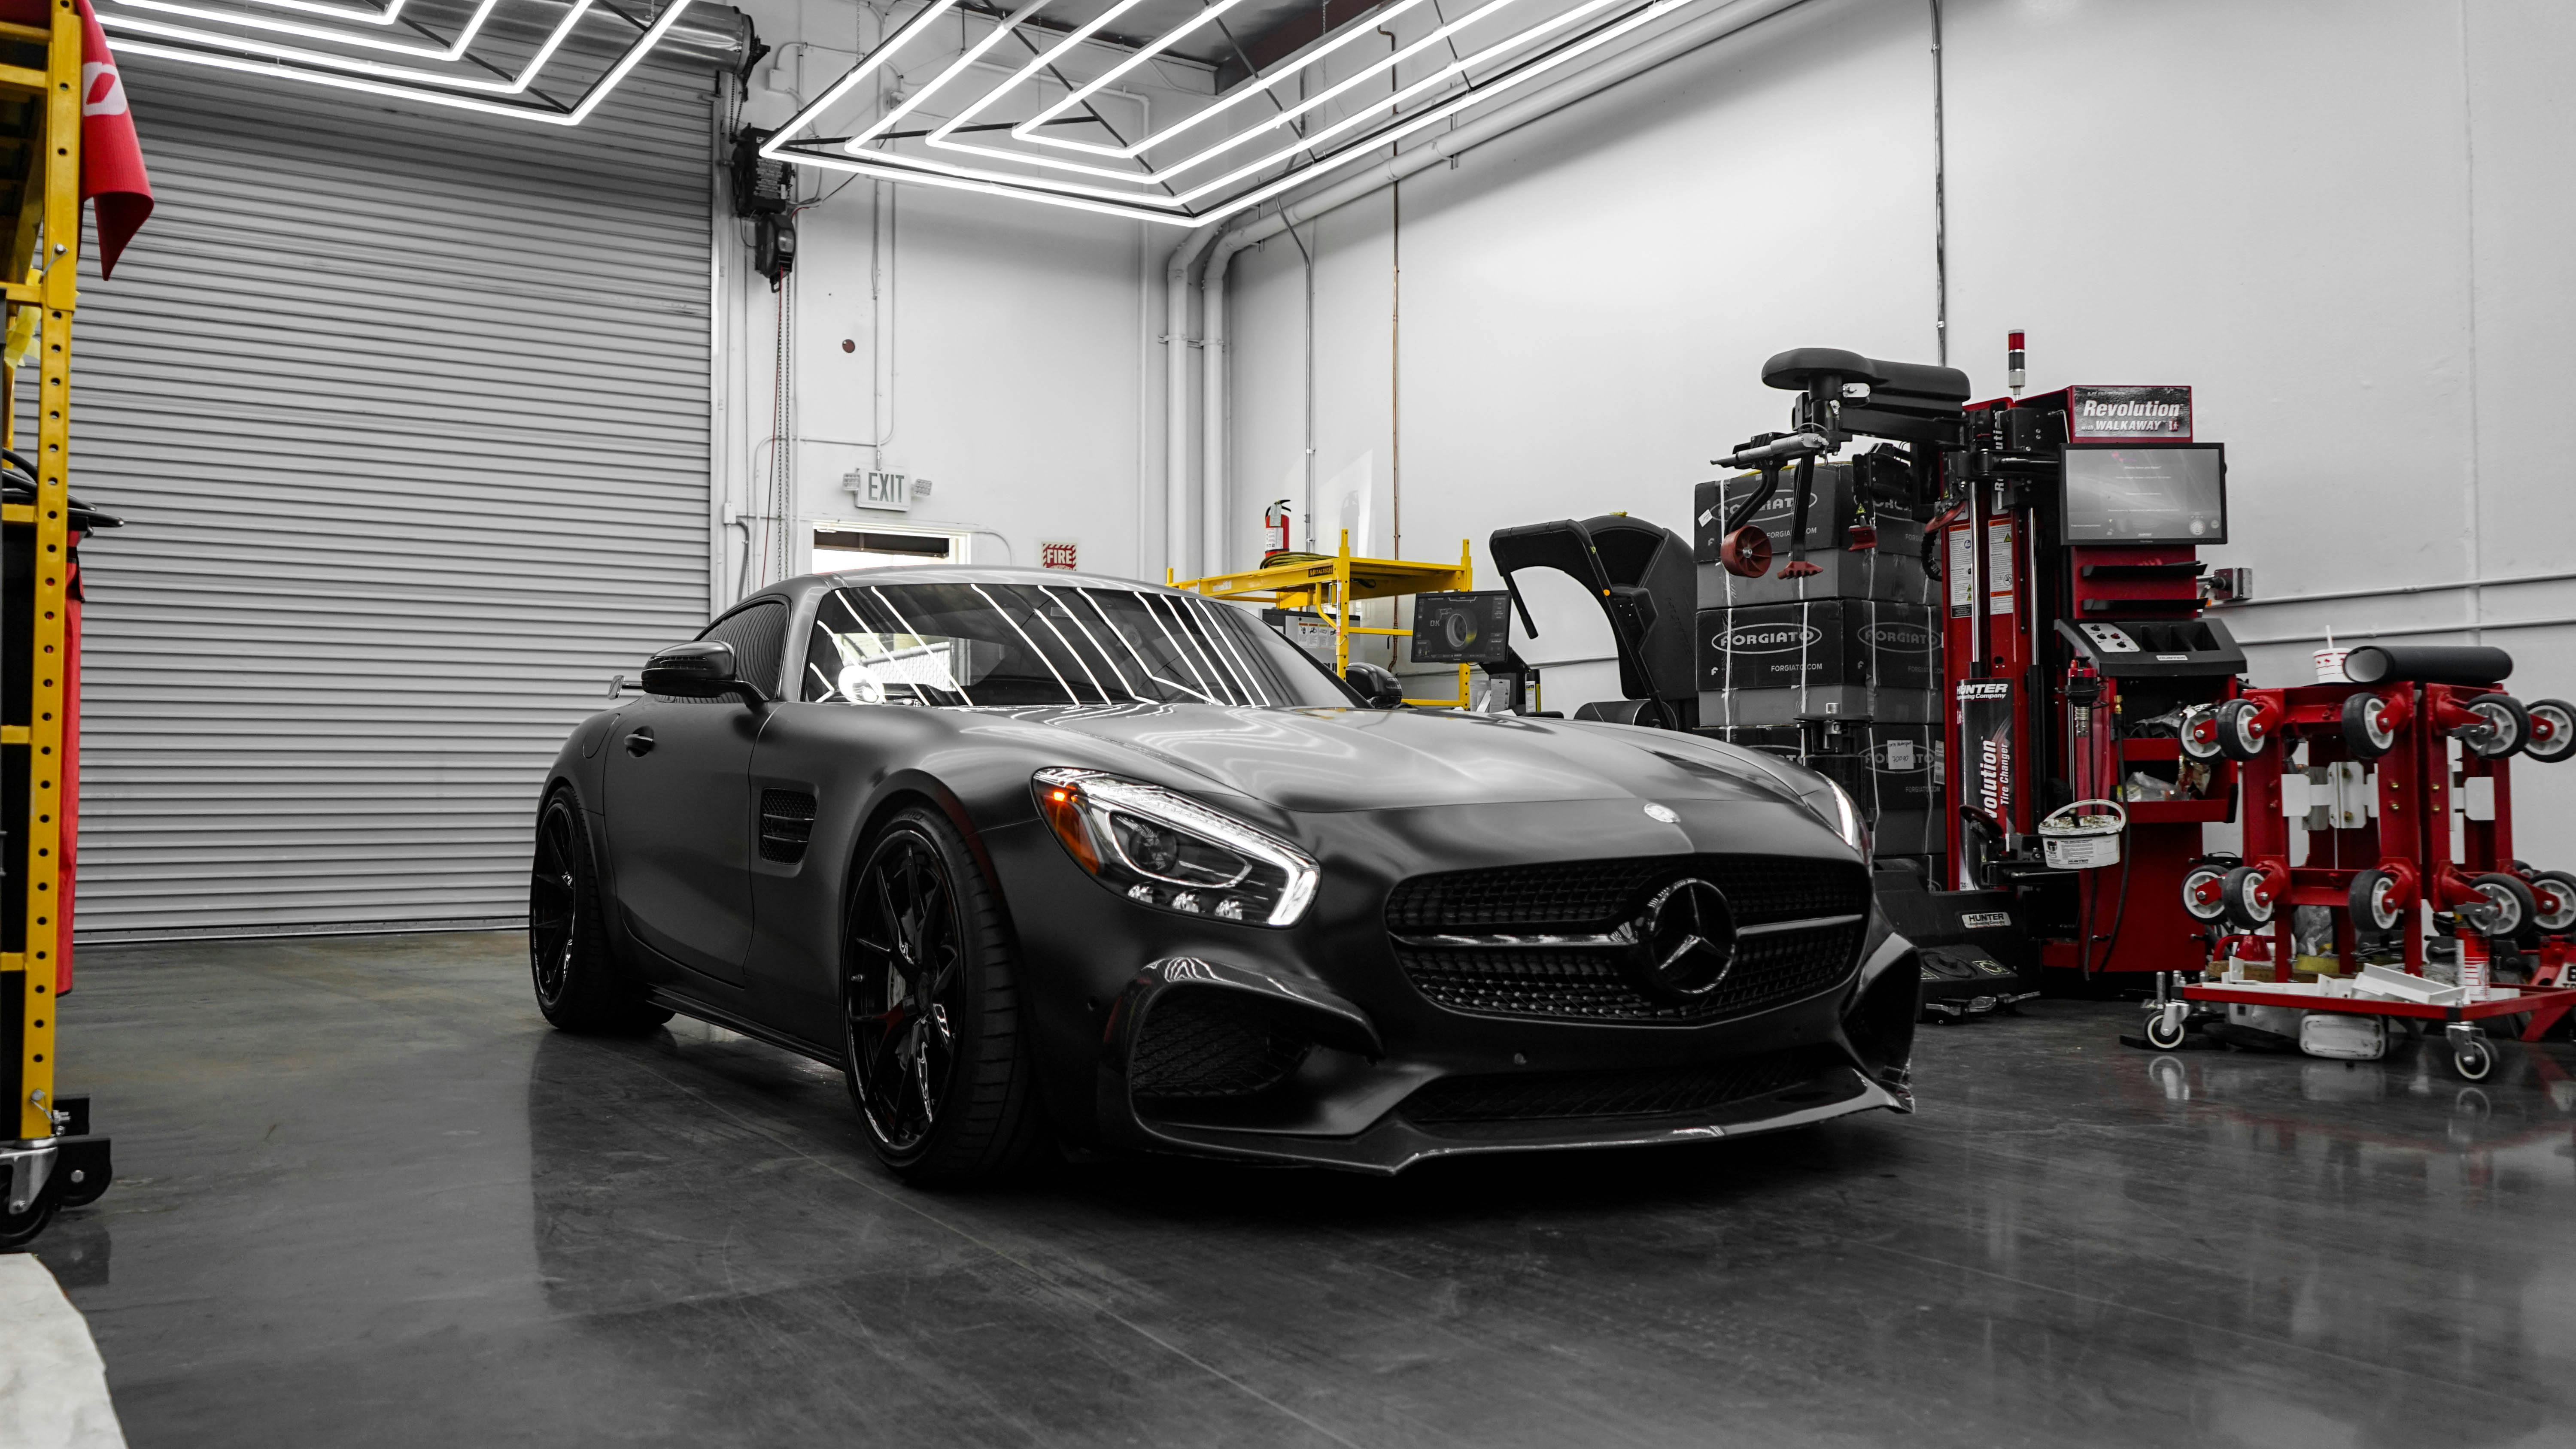 Matte Black Mercedes Benz Parked in a Garage · Free Stock Photo